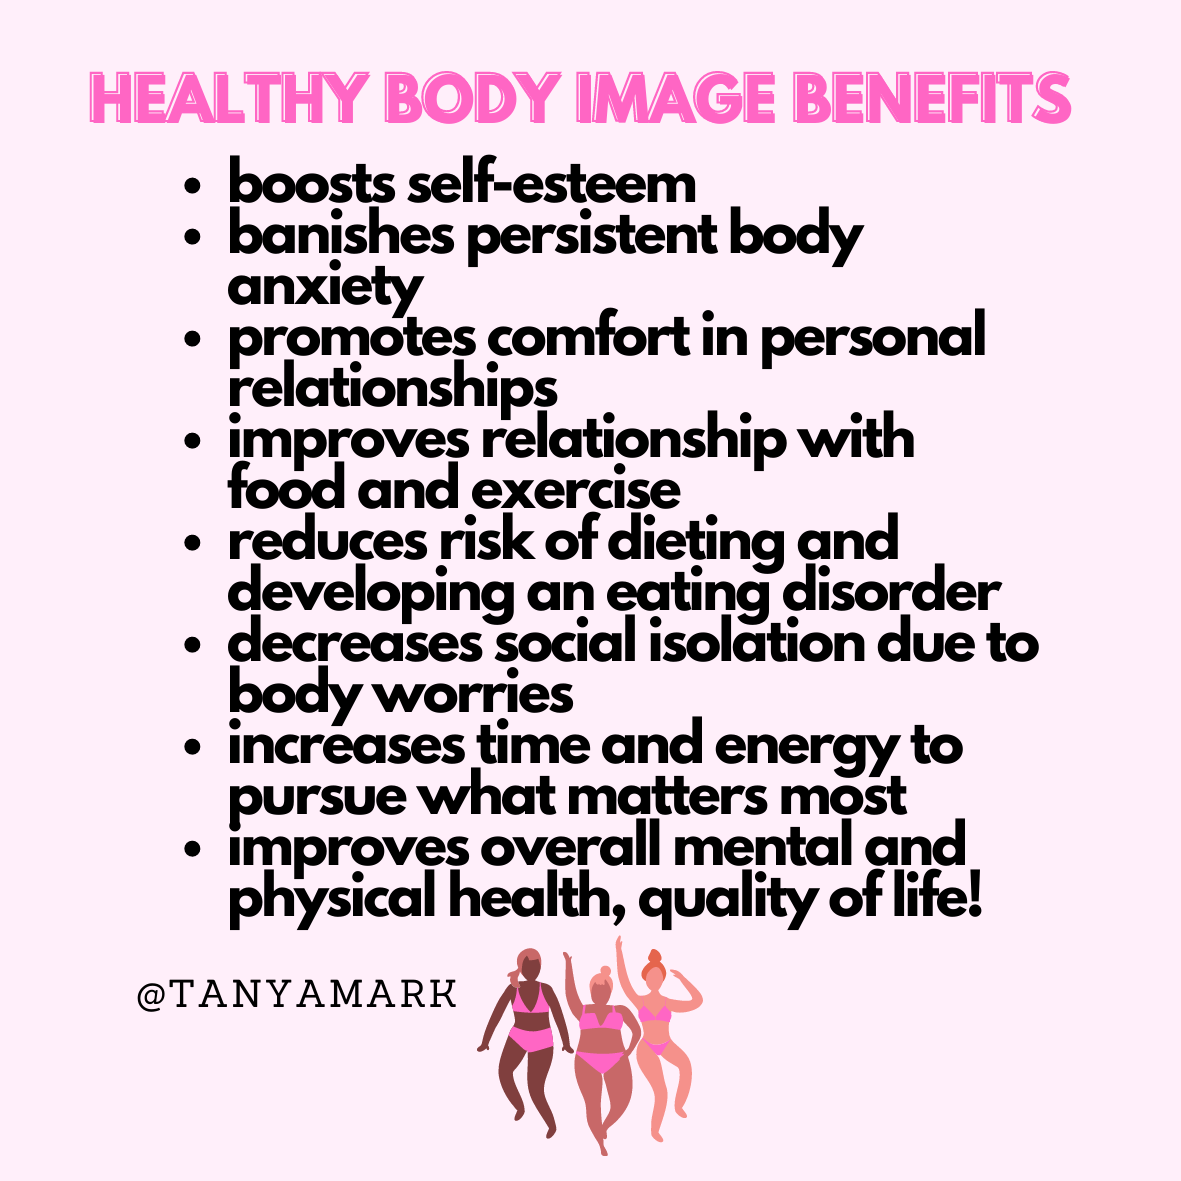 Benefits of healthy body image